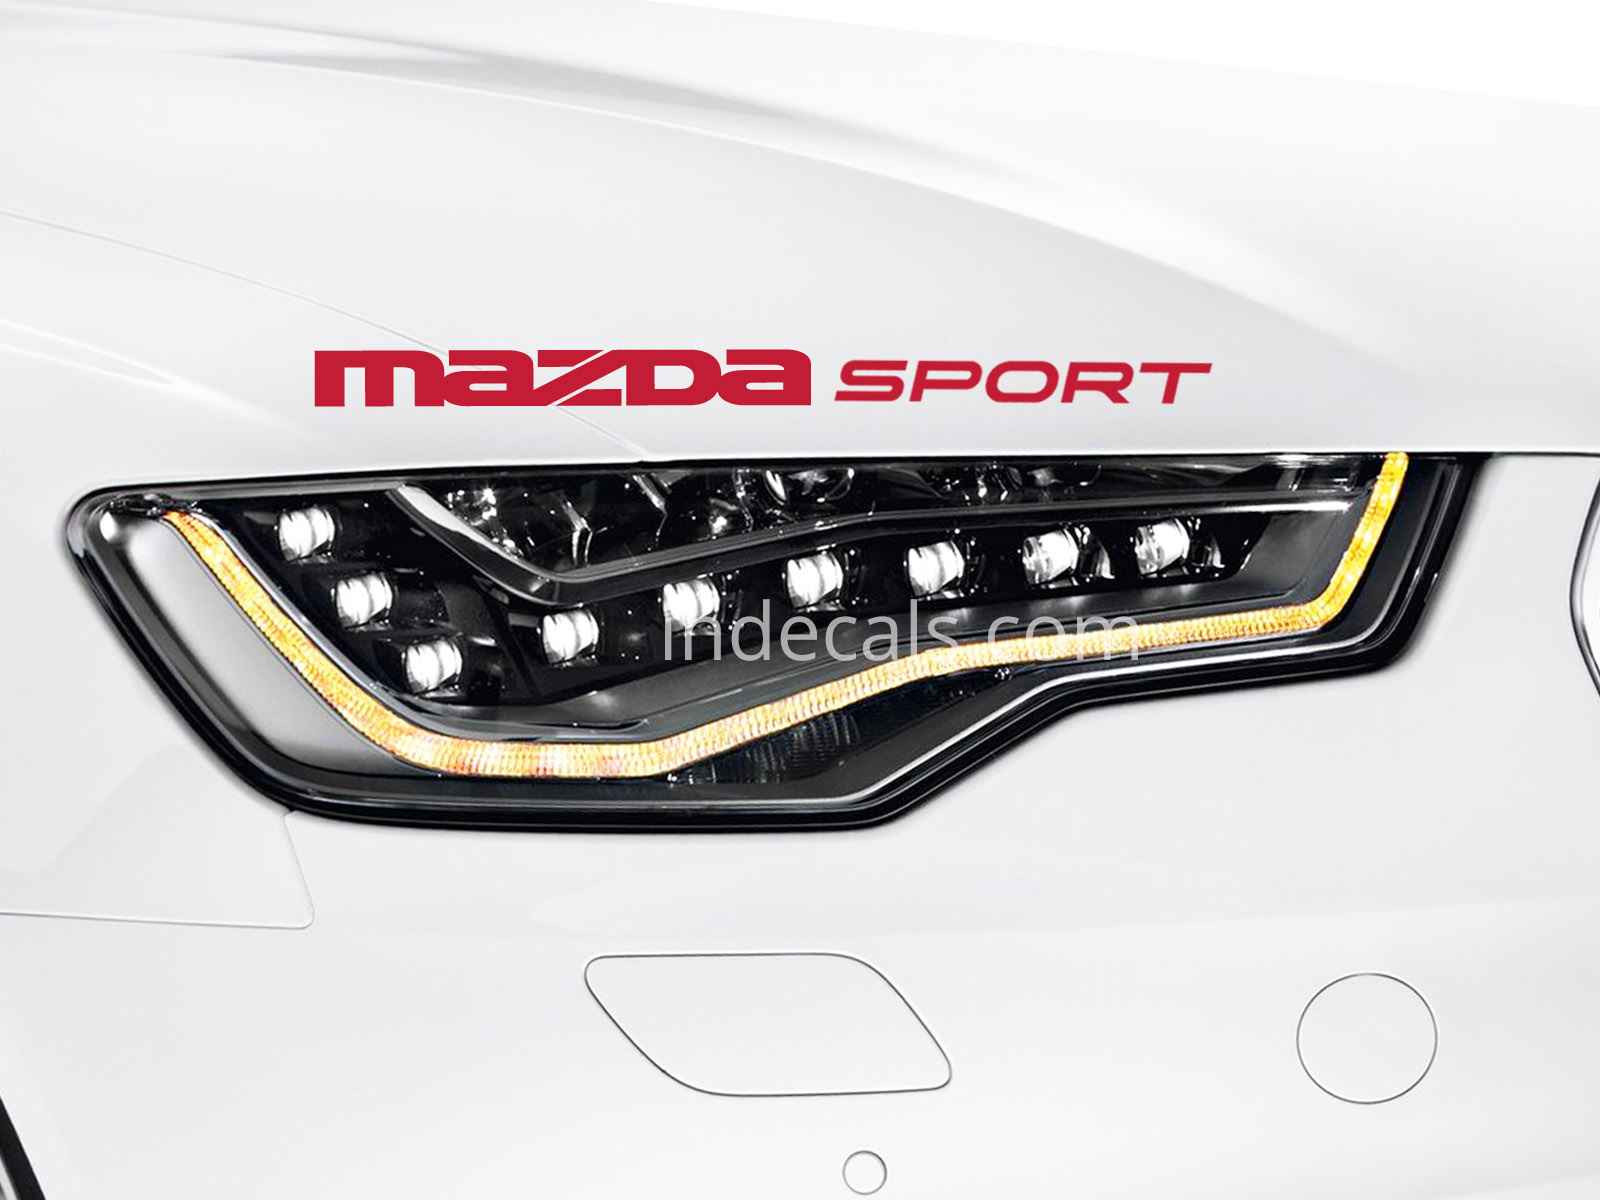 1 x Mazda Sport Sticker - Red